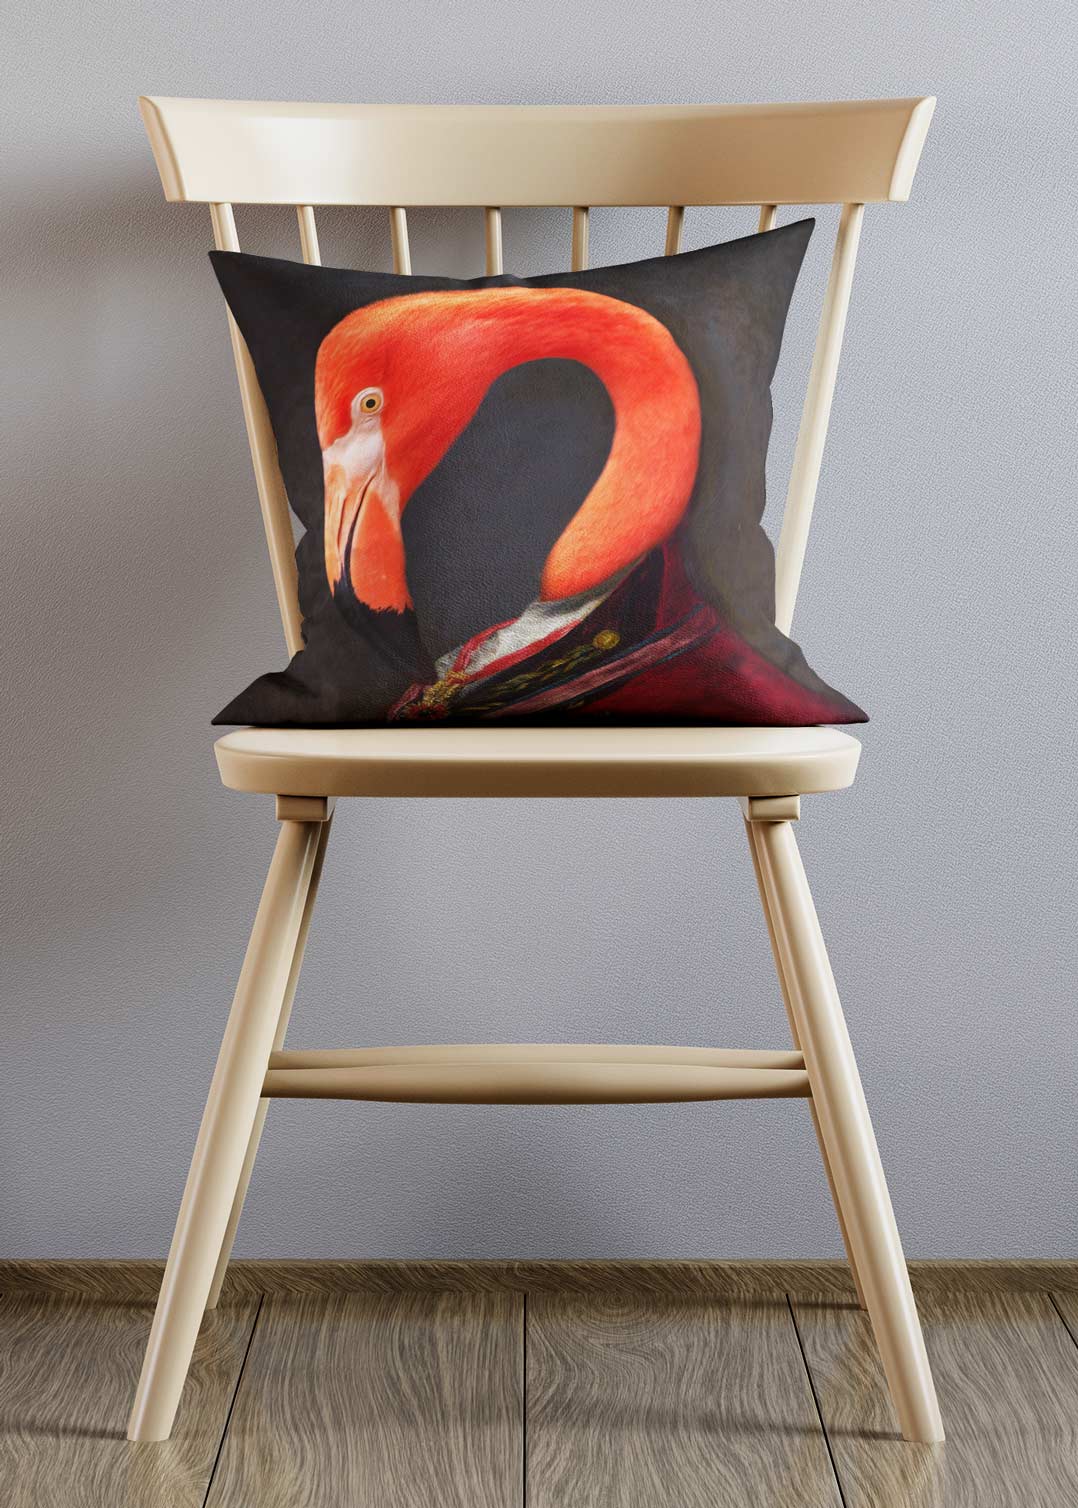 Flamingo Head Portrait Cushion